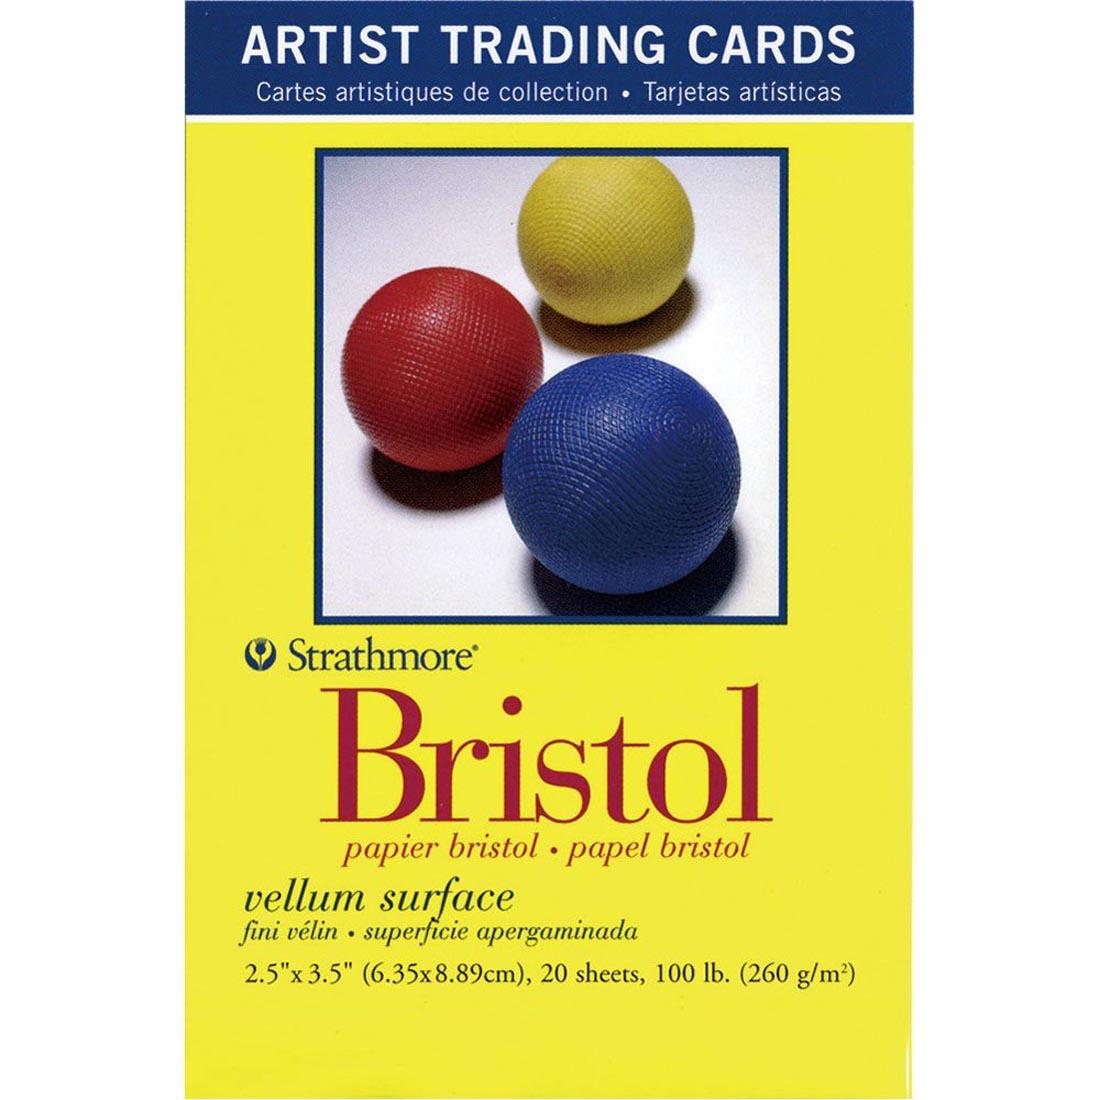 Strathmore Vellum Bristol Artist Trading Cards